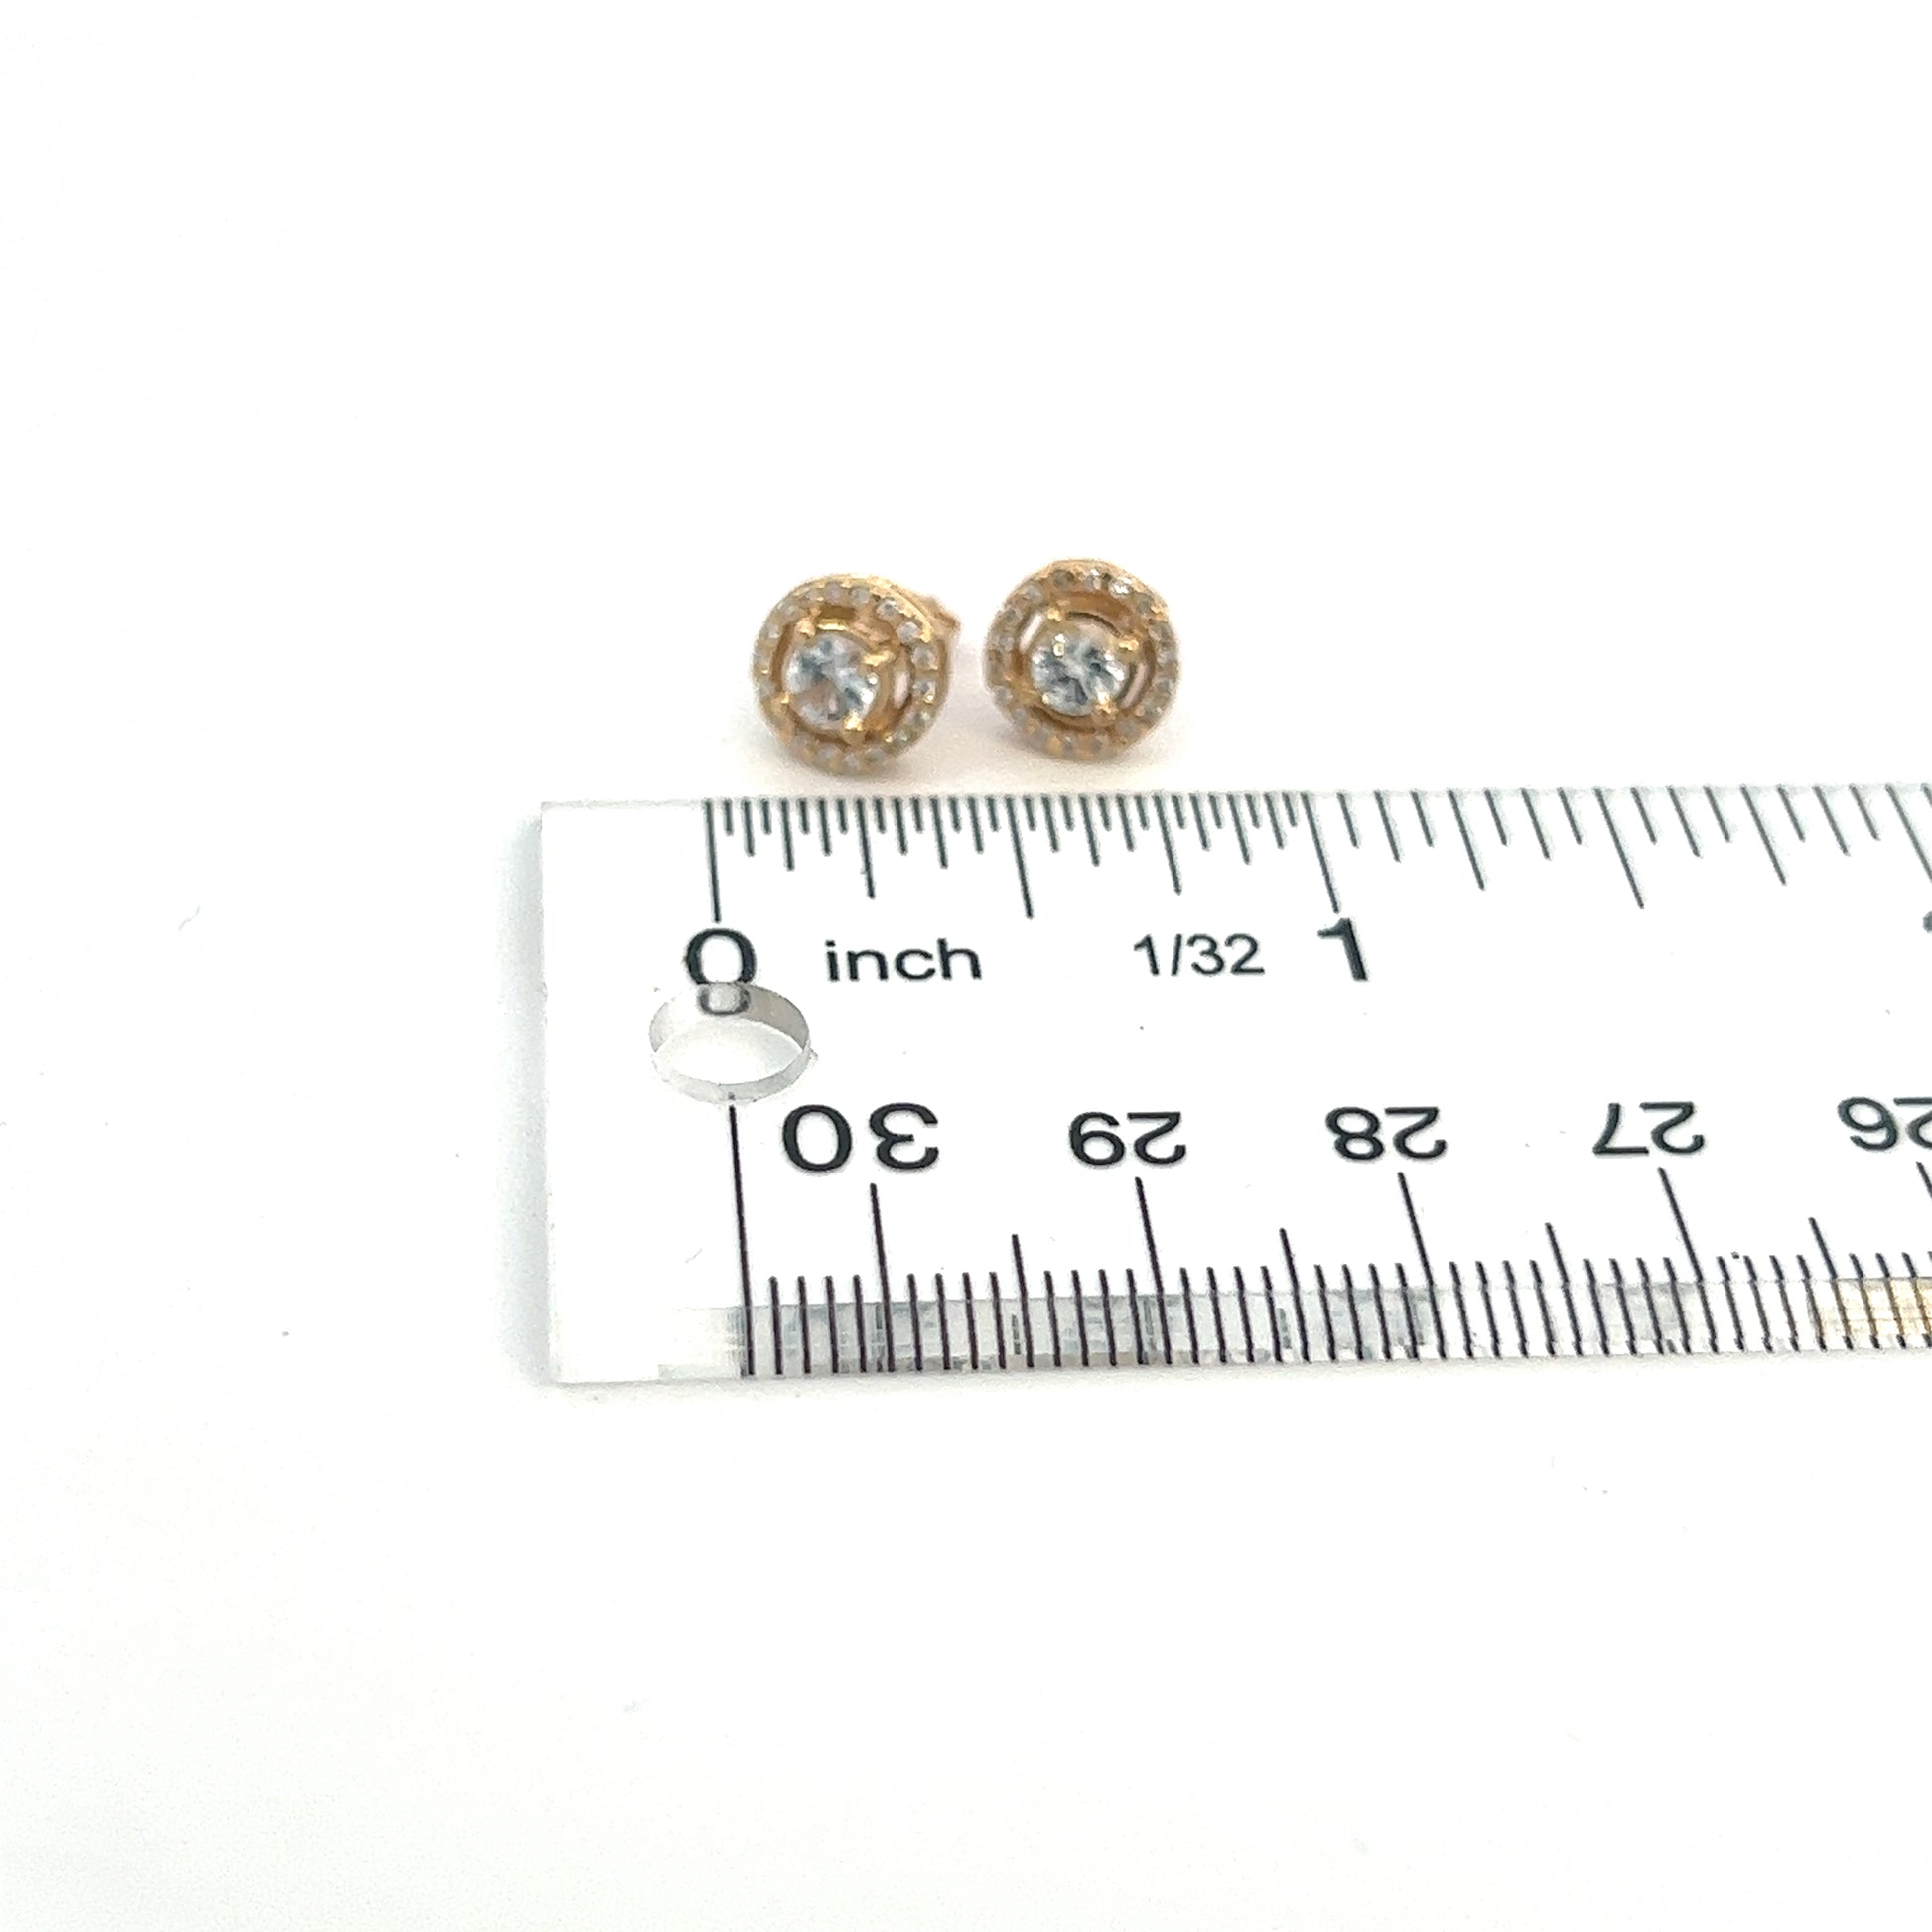 Natural White Sapphire Diamond Stud Earrings 14k Yellow Gold 0.97 TCW Certified $3,075 216092 - Certified Fine Jewelry